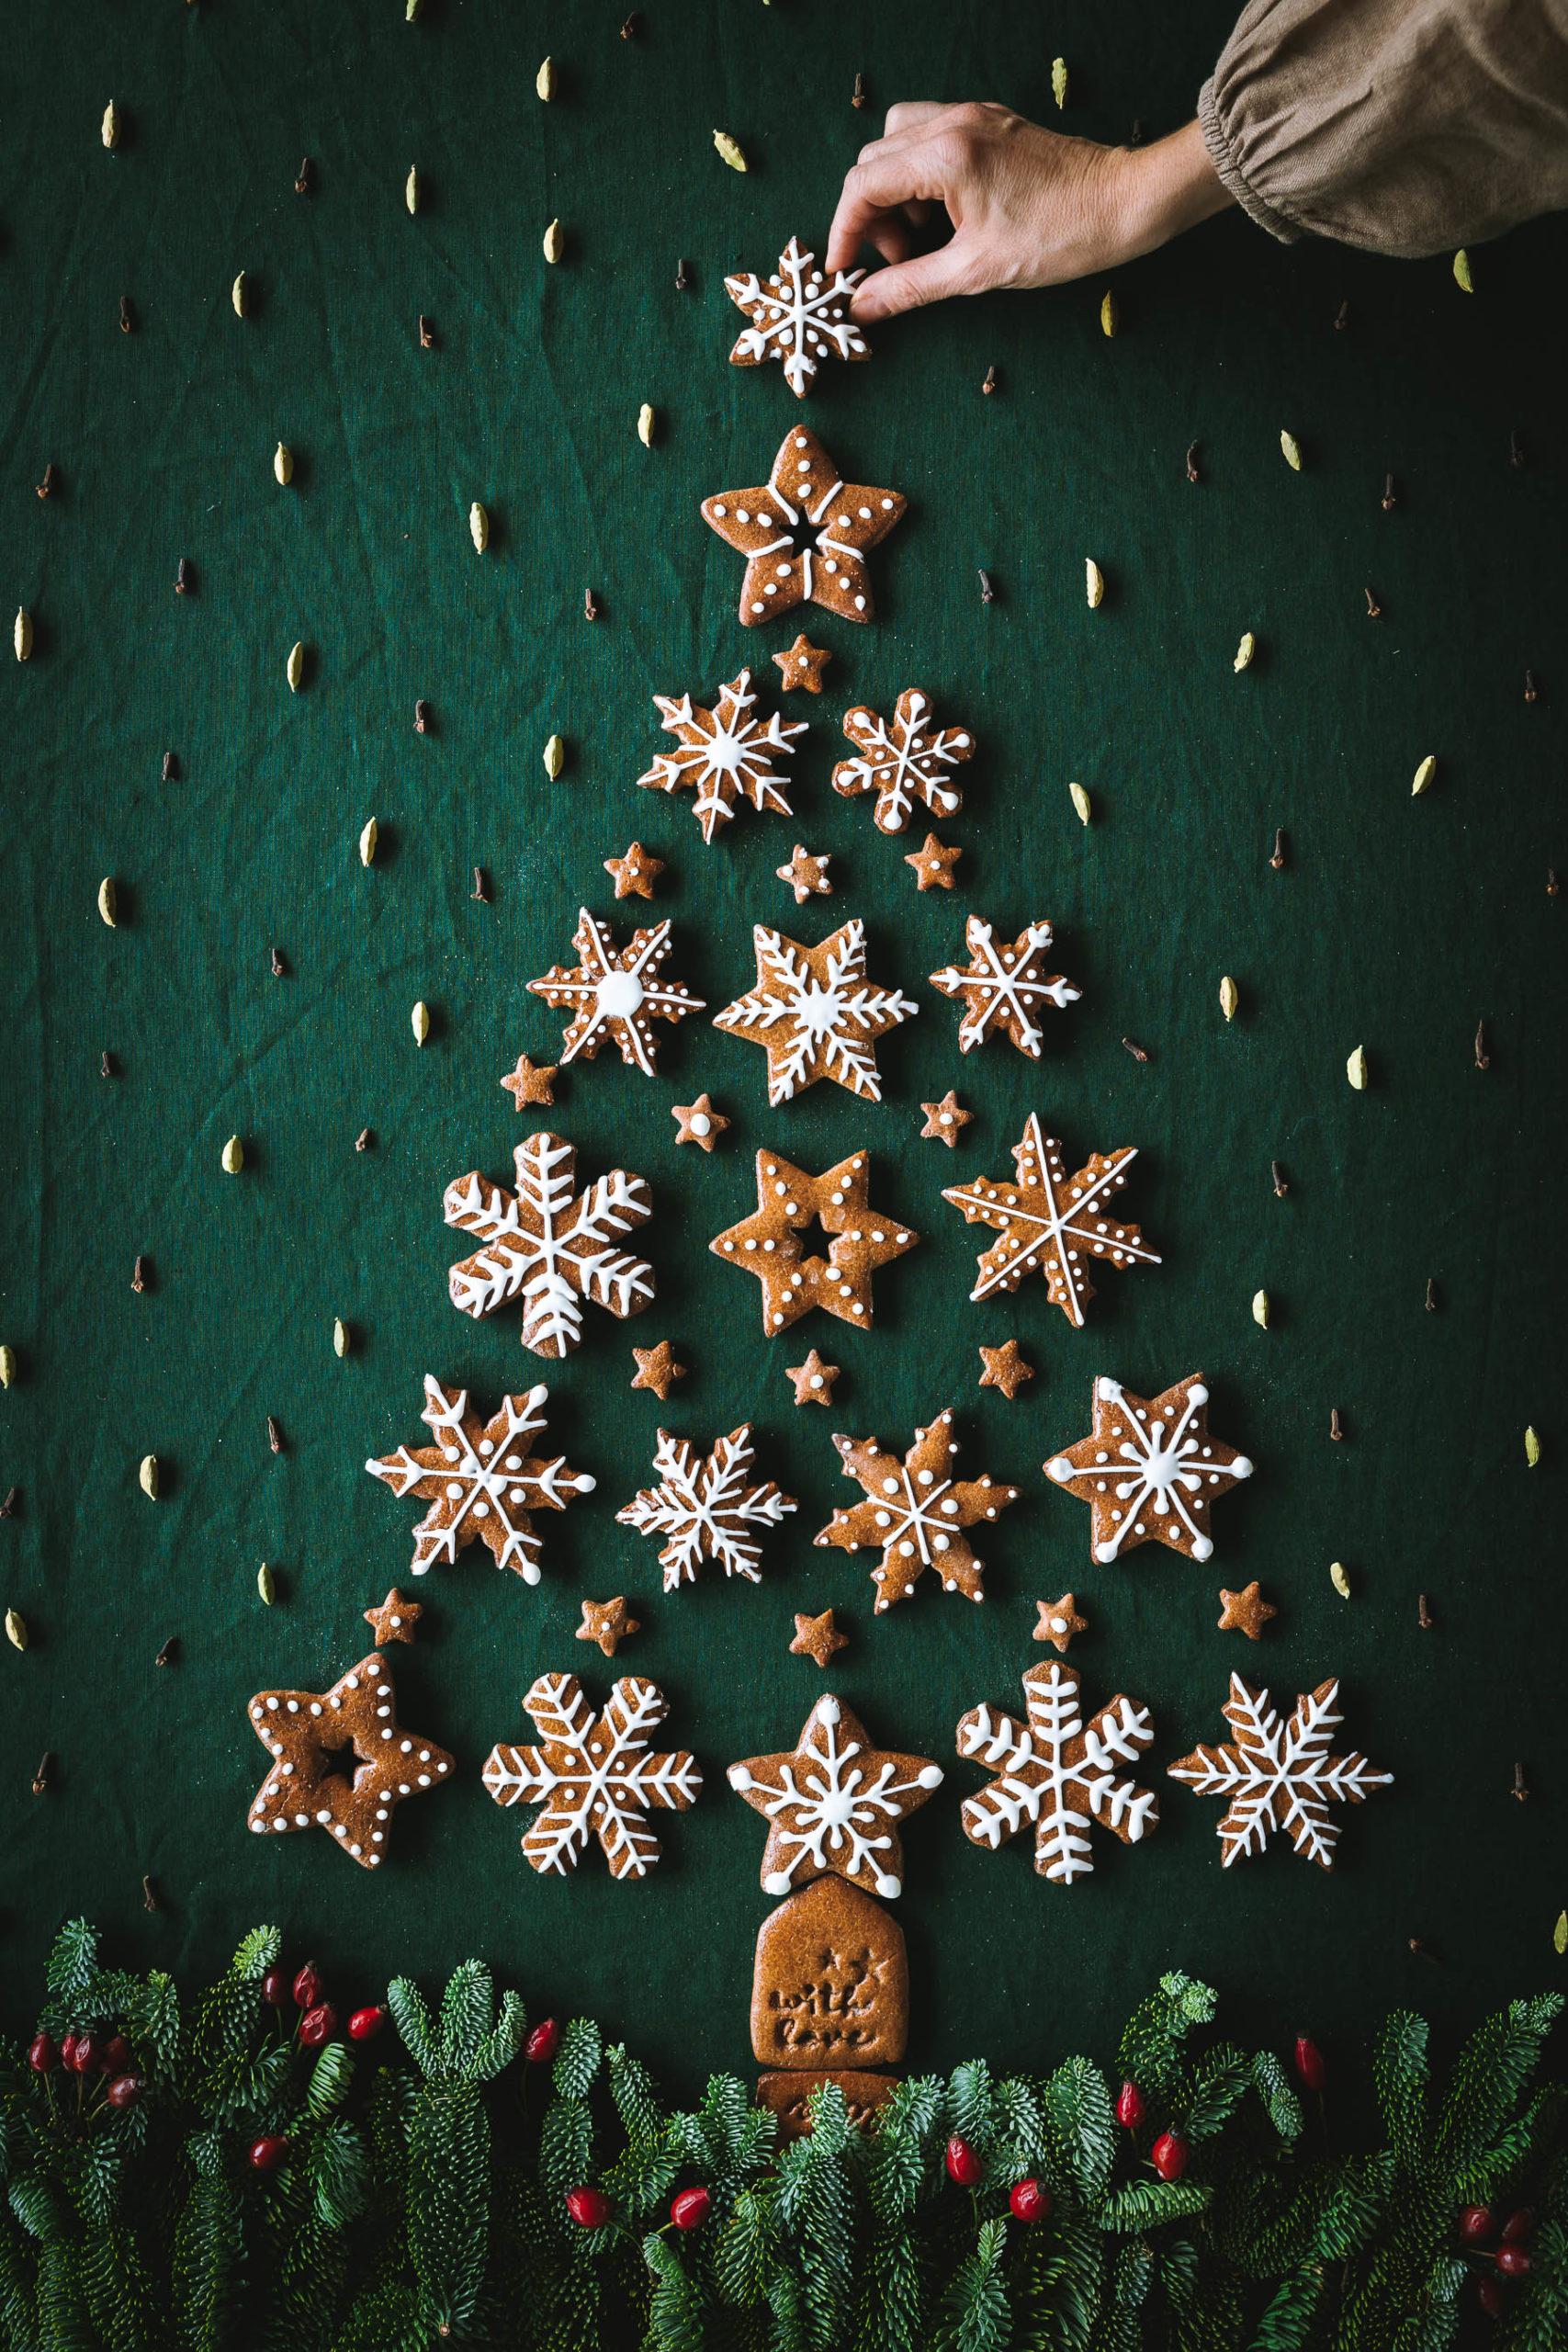 Gingerbread Christmas Tree photography by Zuzana Rainet, food photographer from Bratislava Slovakia